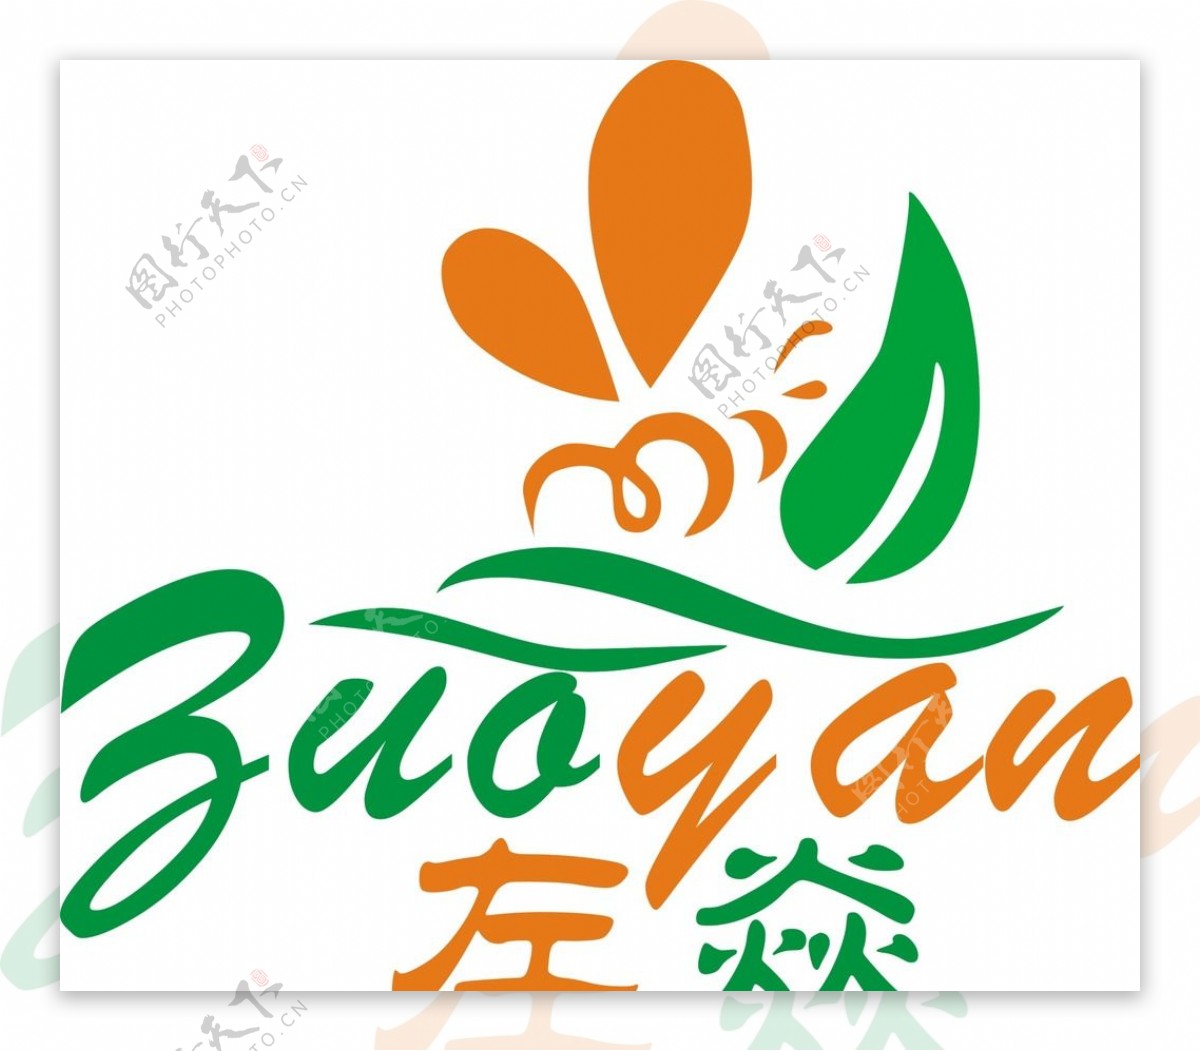 蜂蜜茶叶logo